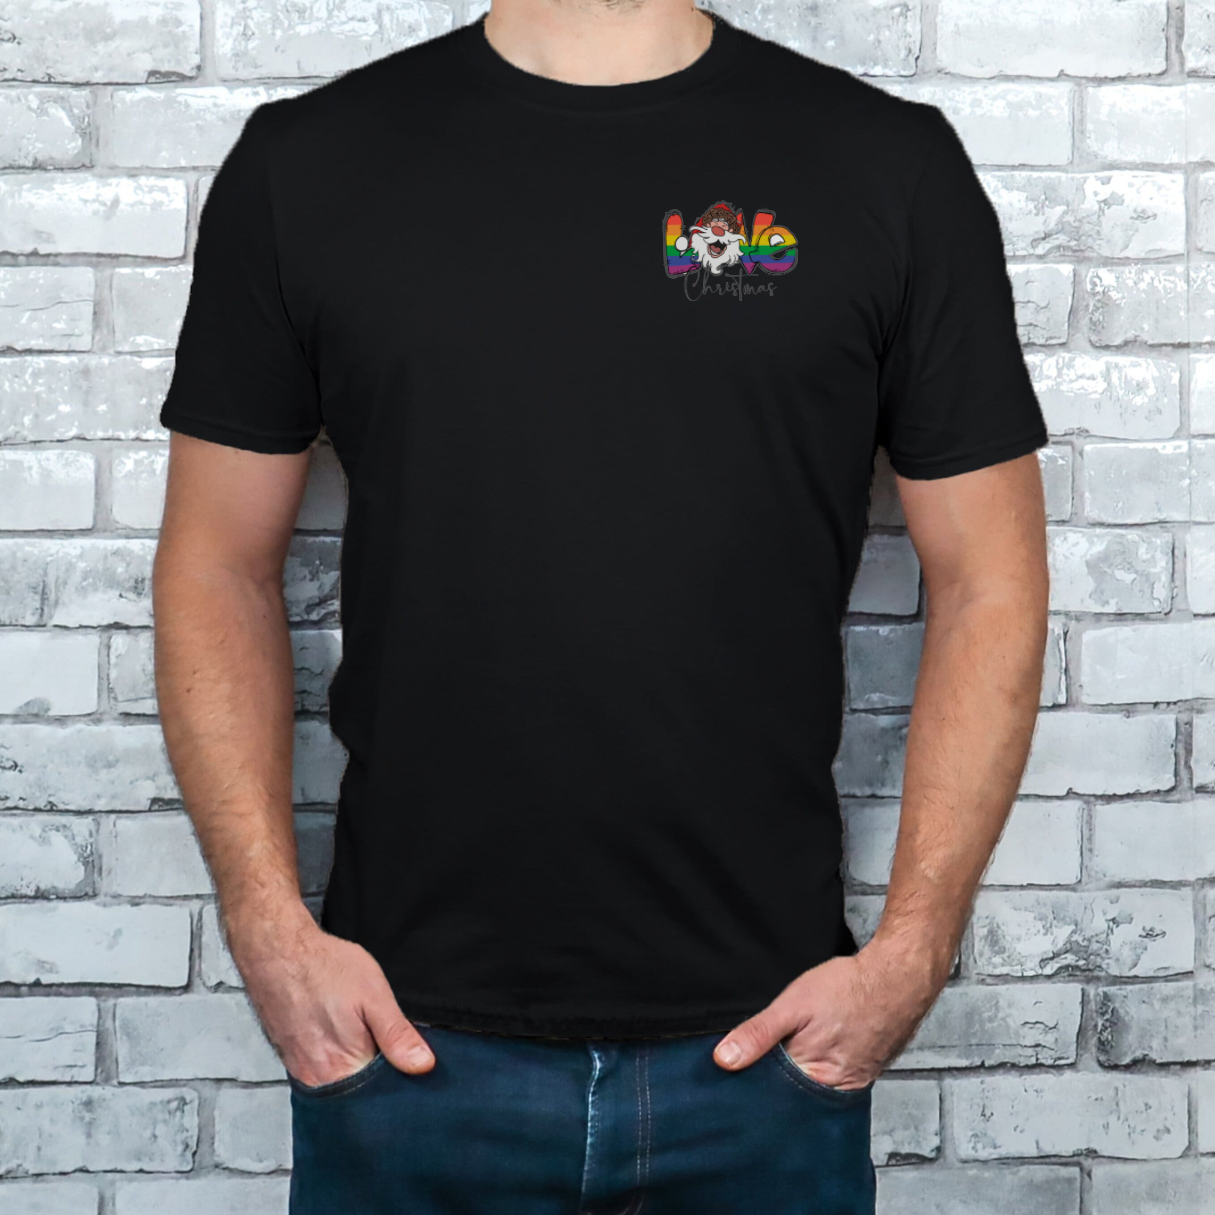 "Pride love Christmas text design centered on black t-shirt."